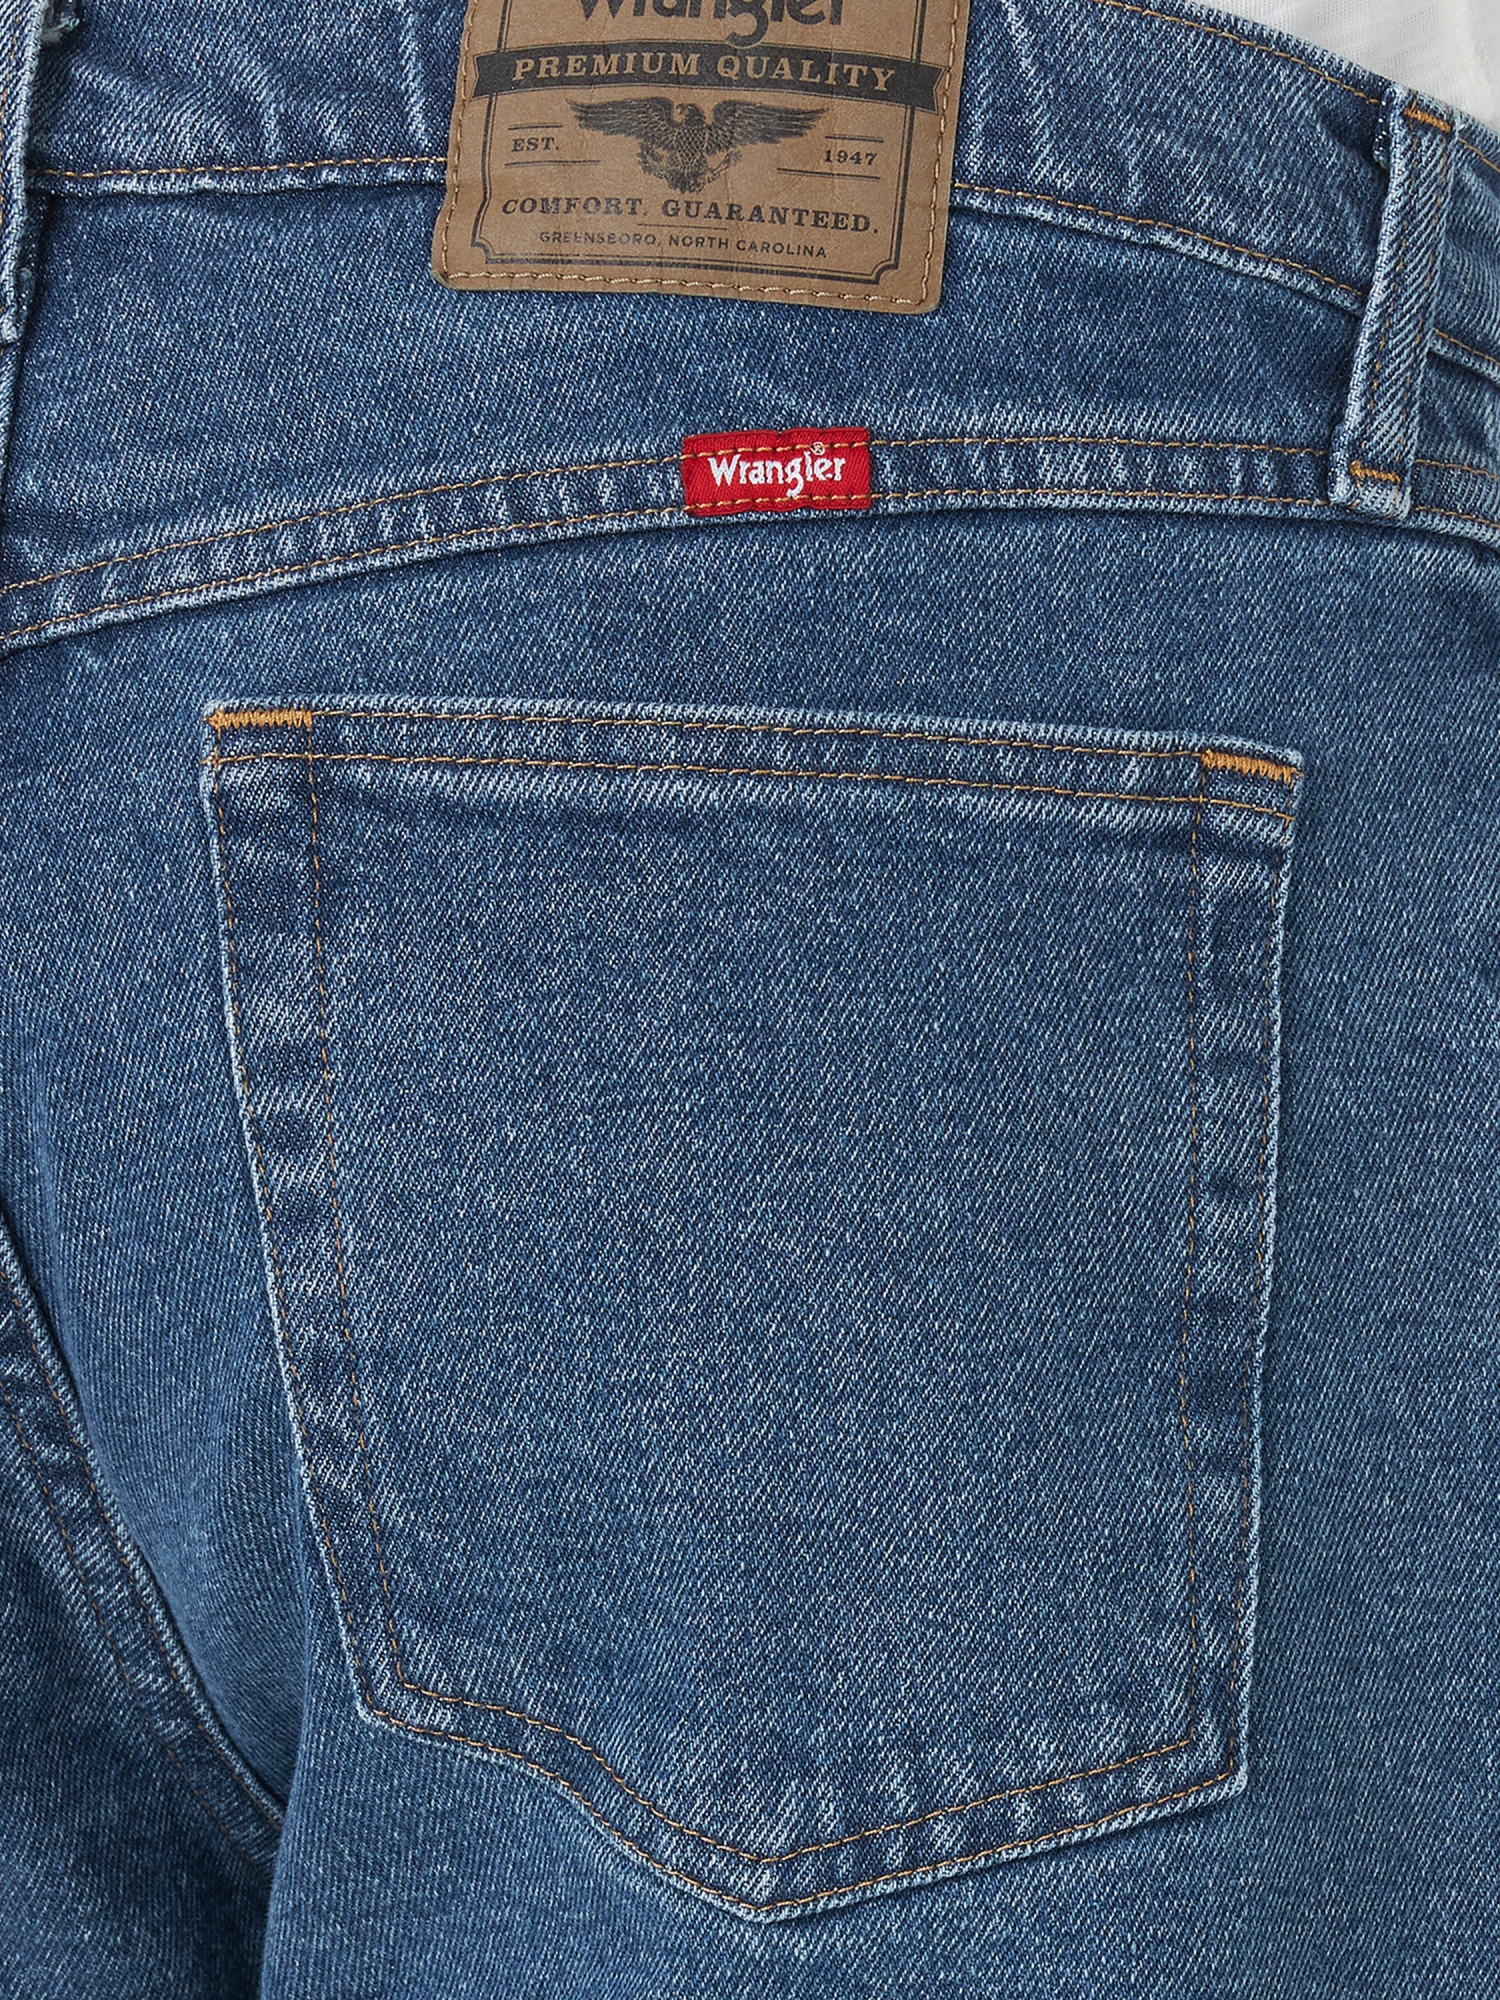 Wrangler Men's and Big Men's Regular Fit Jeans with Flex - image 5 of 8